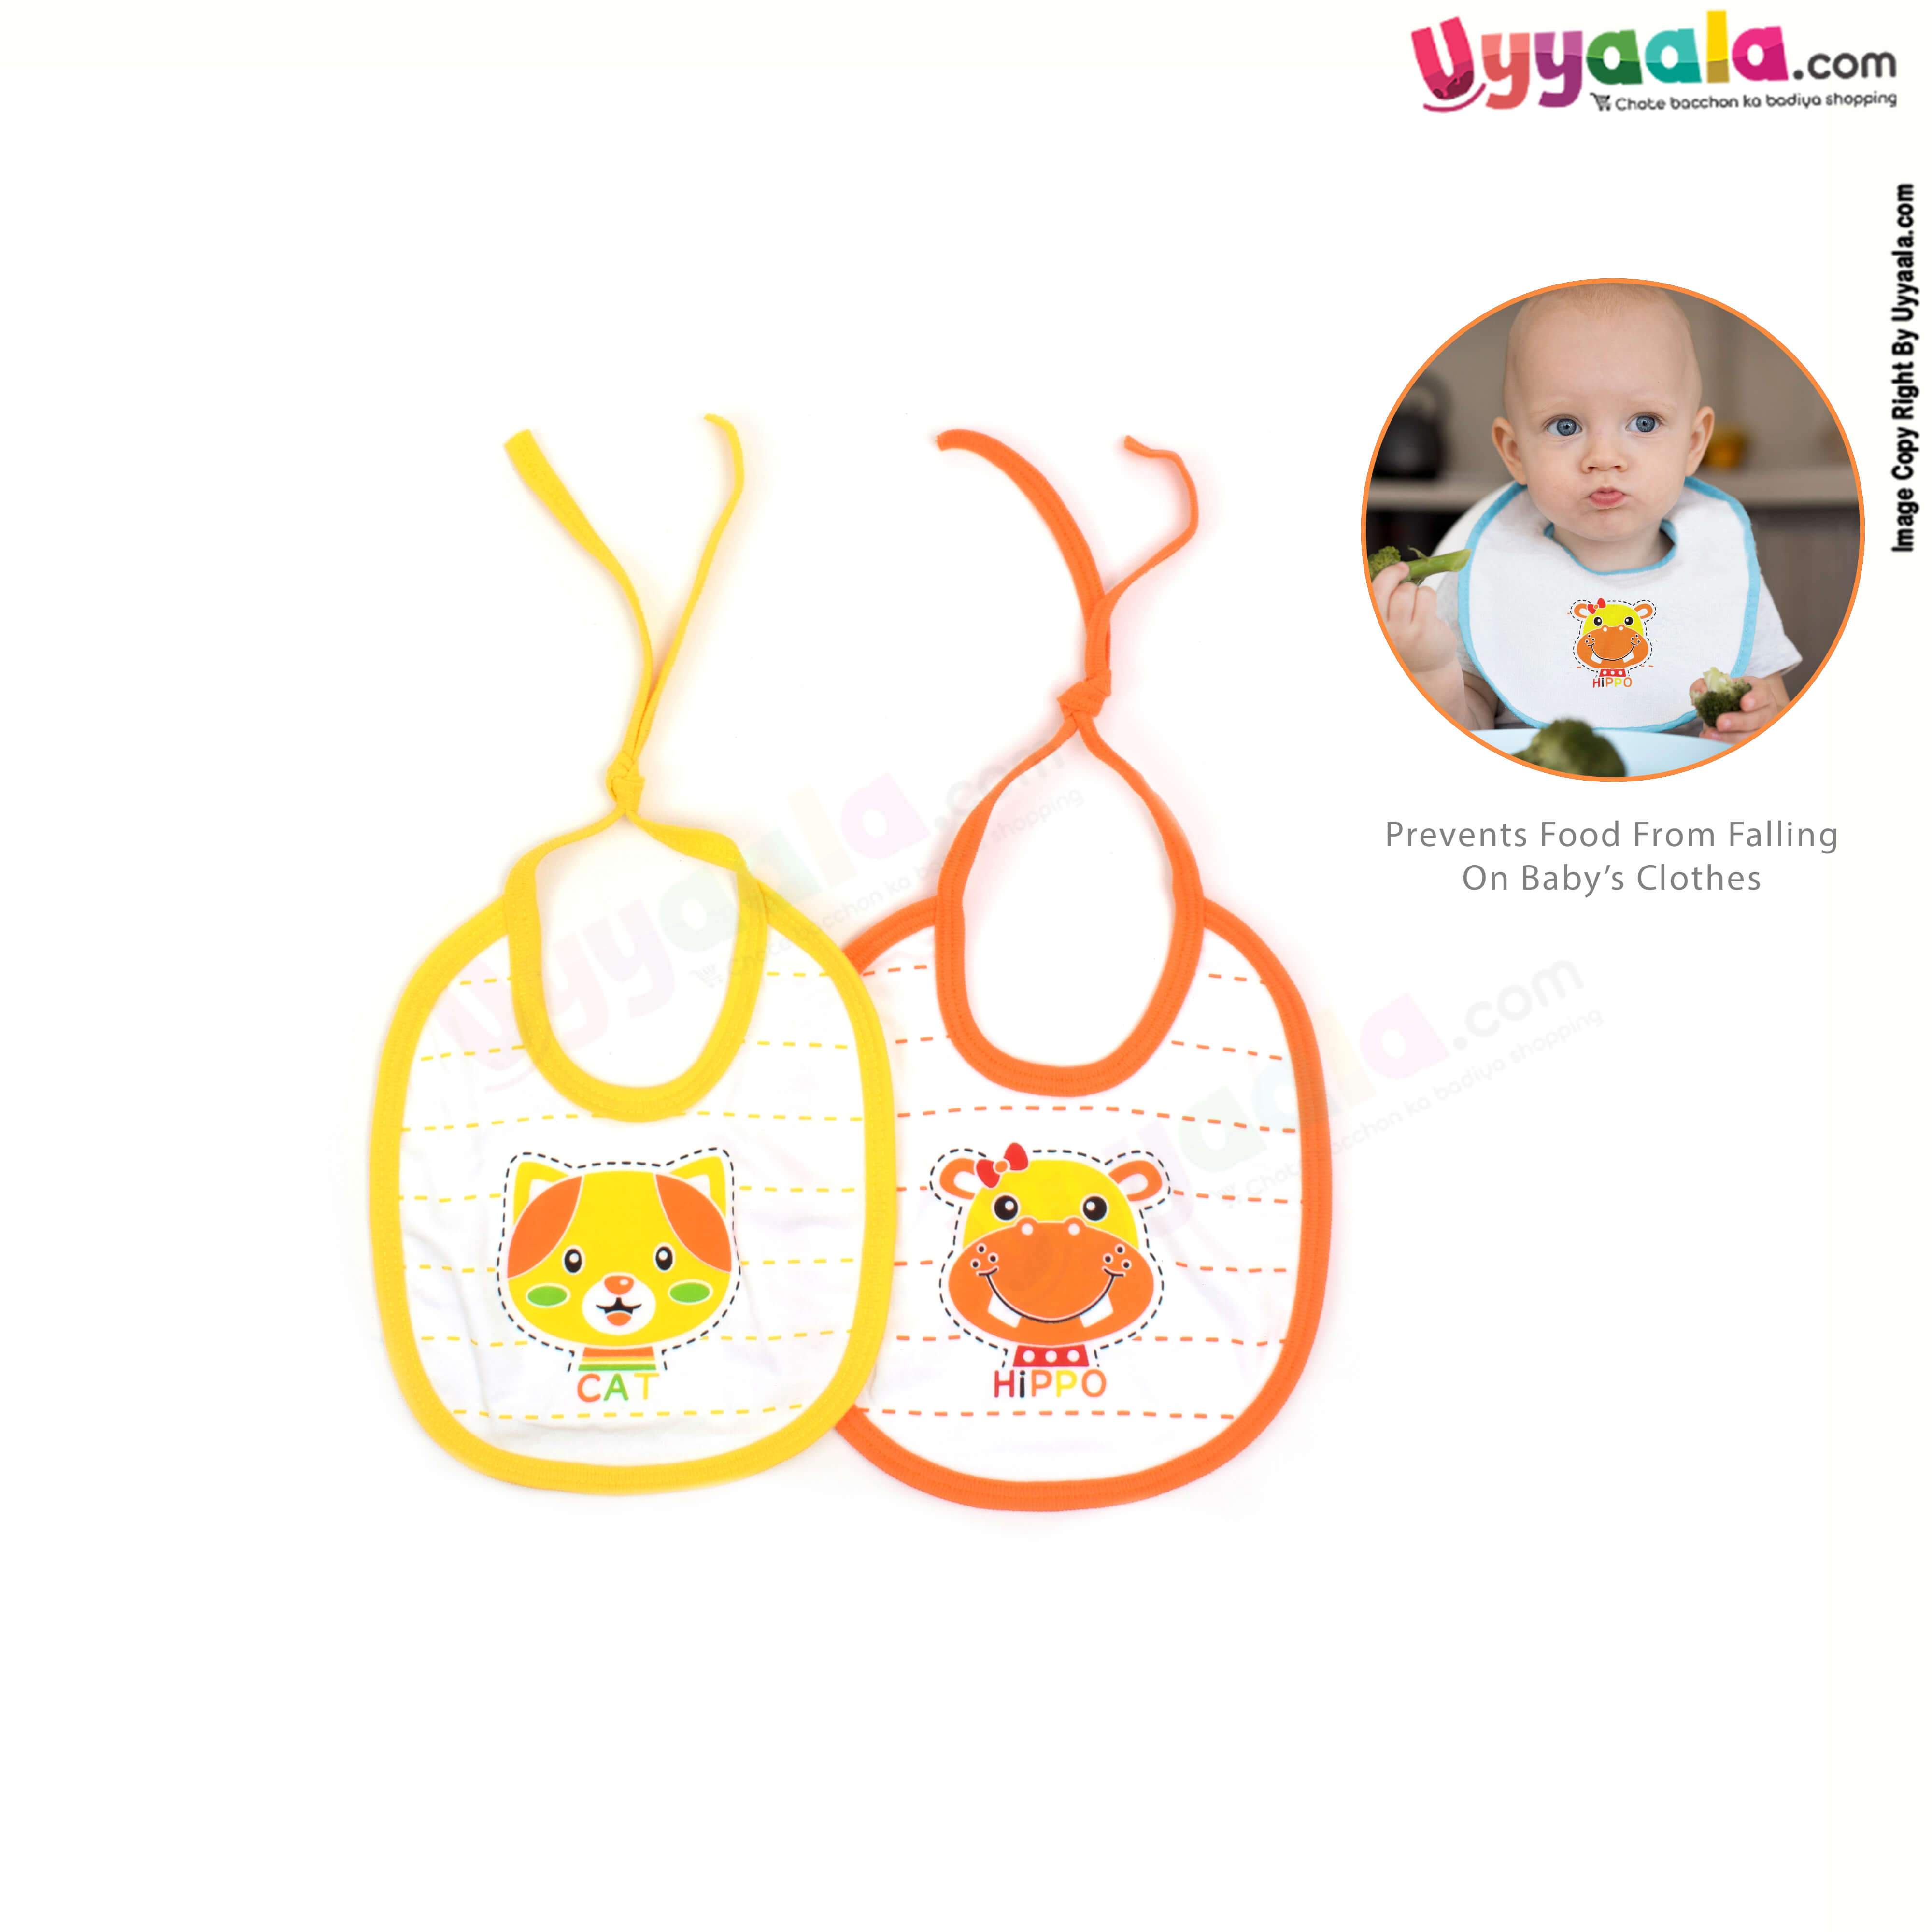 Cotton Baby Feeding Bib, Newborn Top Tieing Model, Kitty & Hippo Print, Pack of 2, (20*18) - White with Yellow & Orange Borders